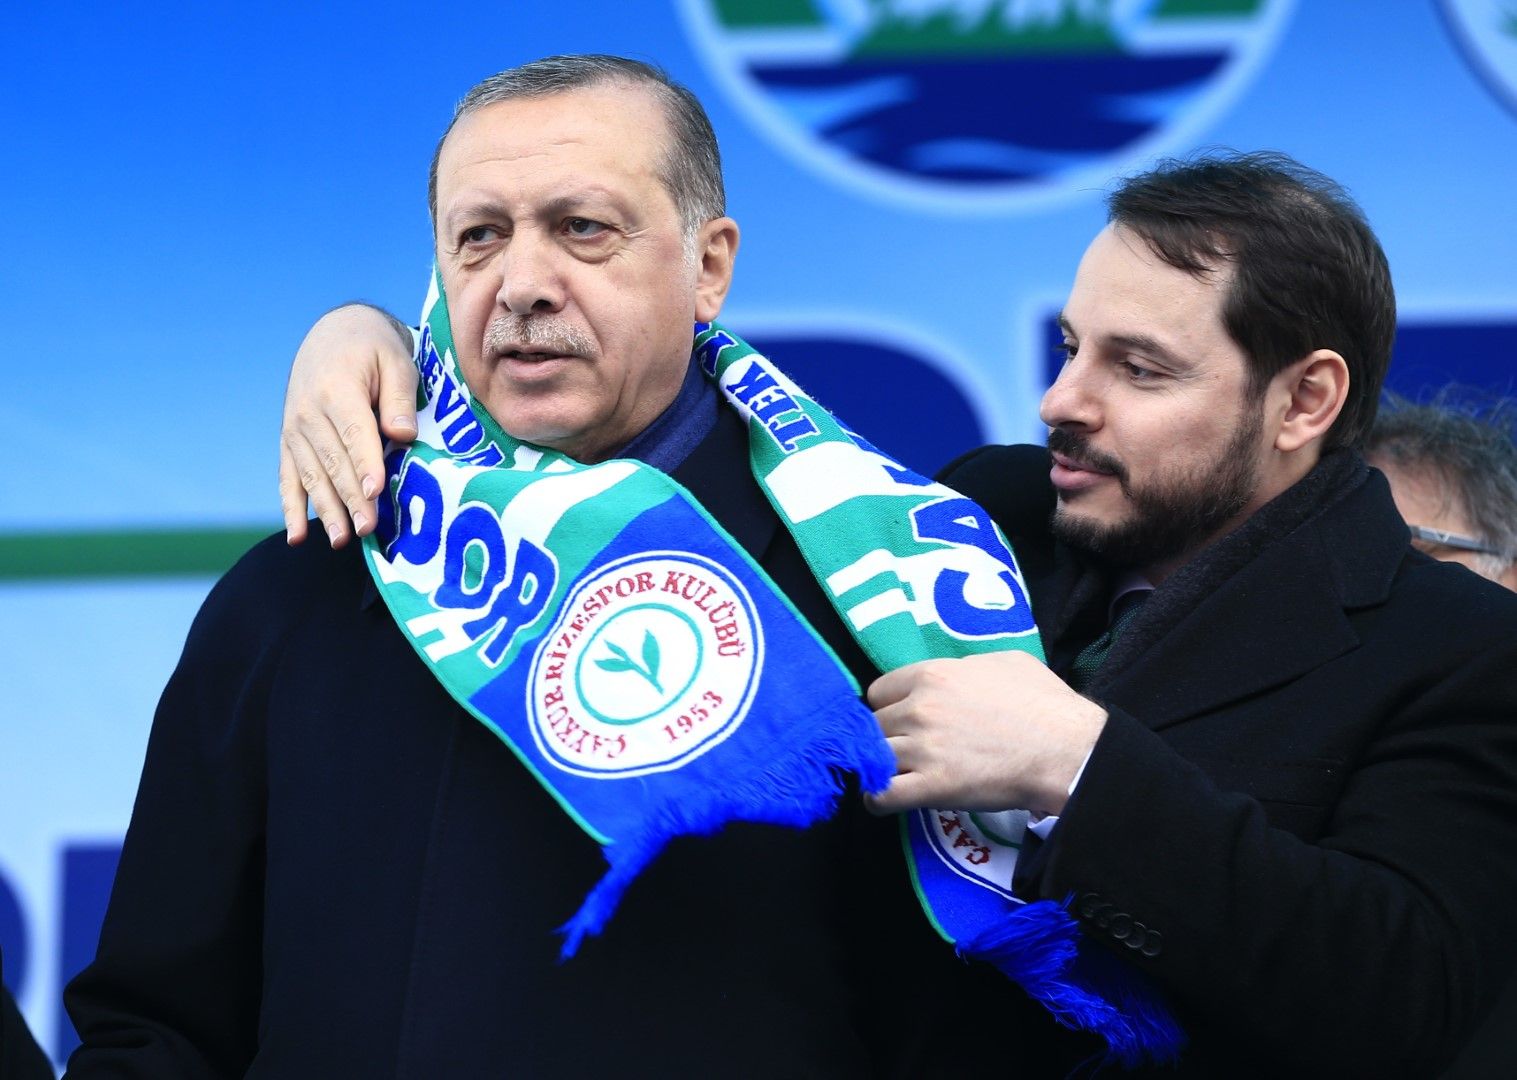 Берат Албайрак намята Реджеп Тайип Ердоган с шалче на футболен клуб, 3 април 2017 г. 